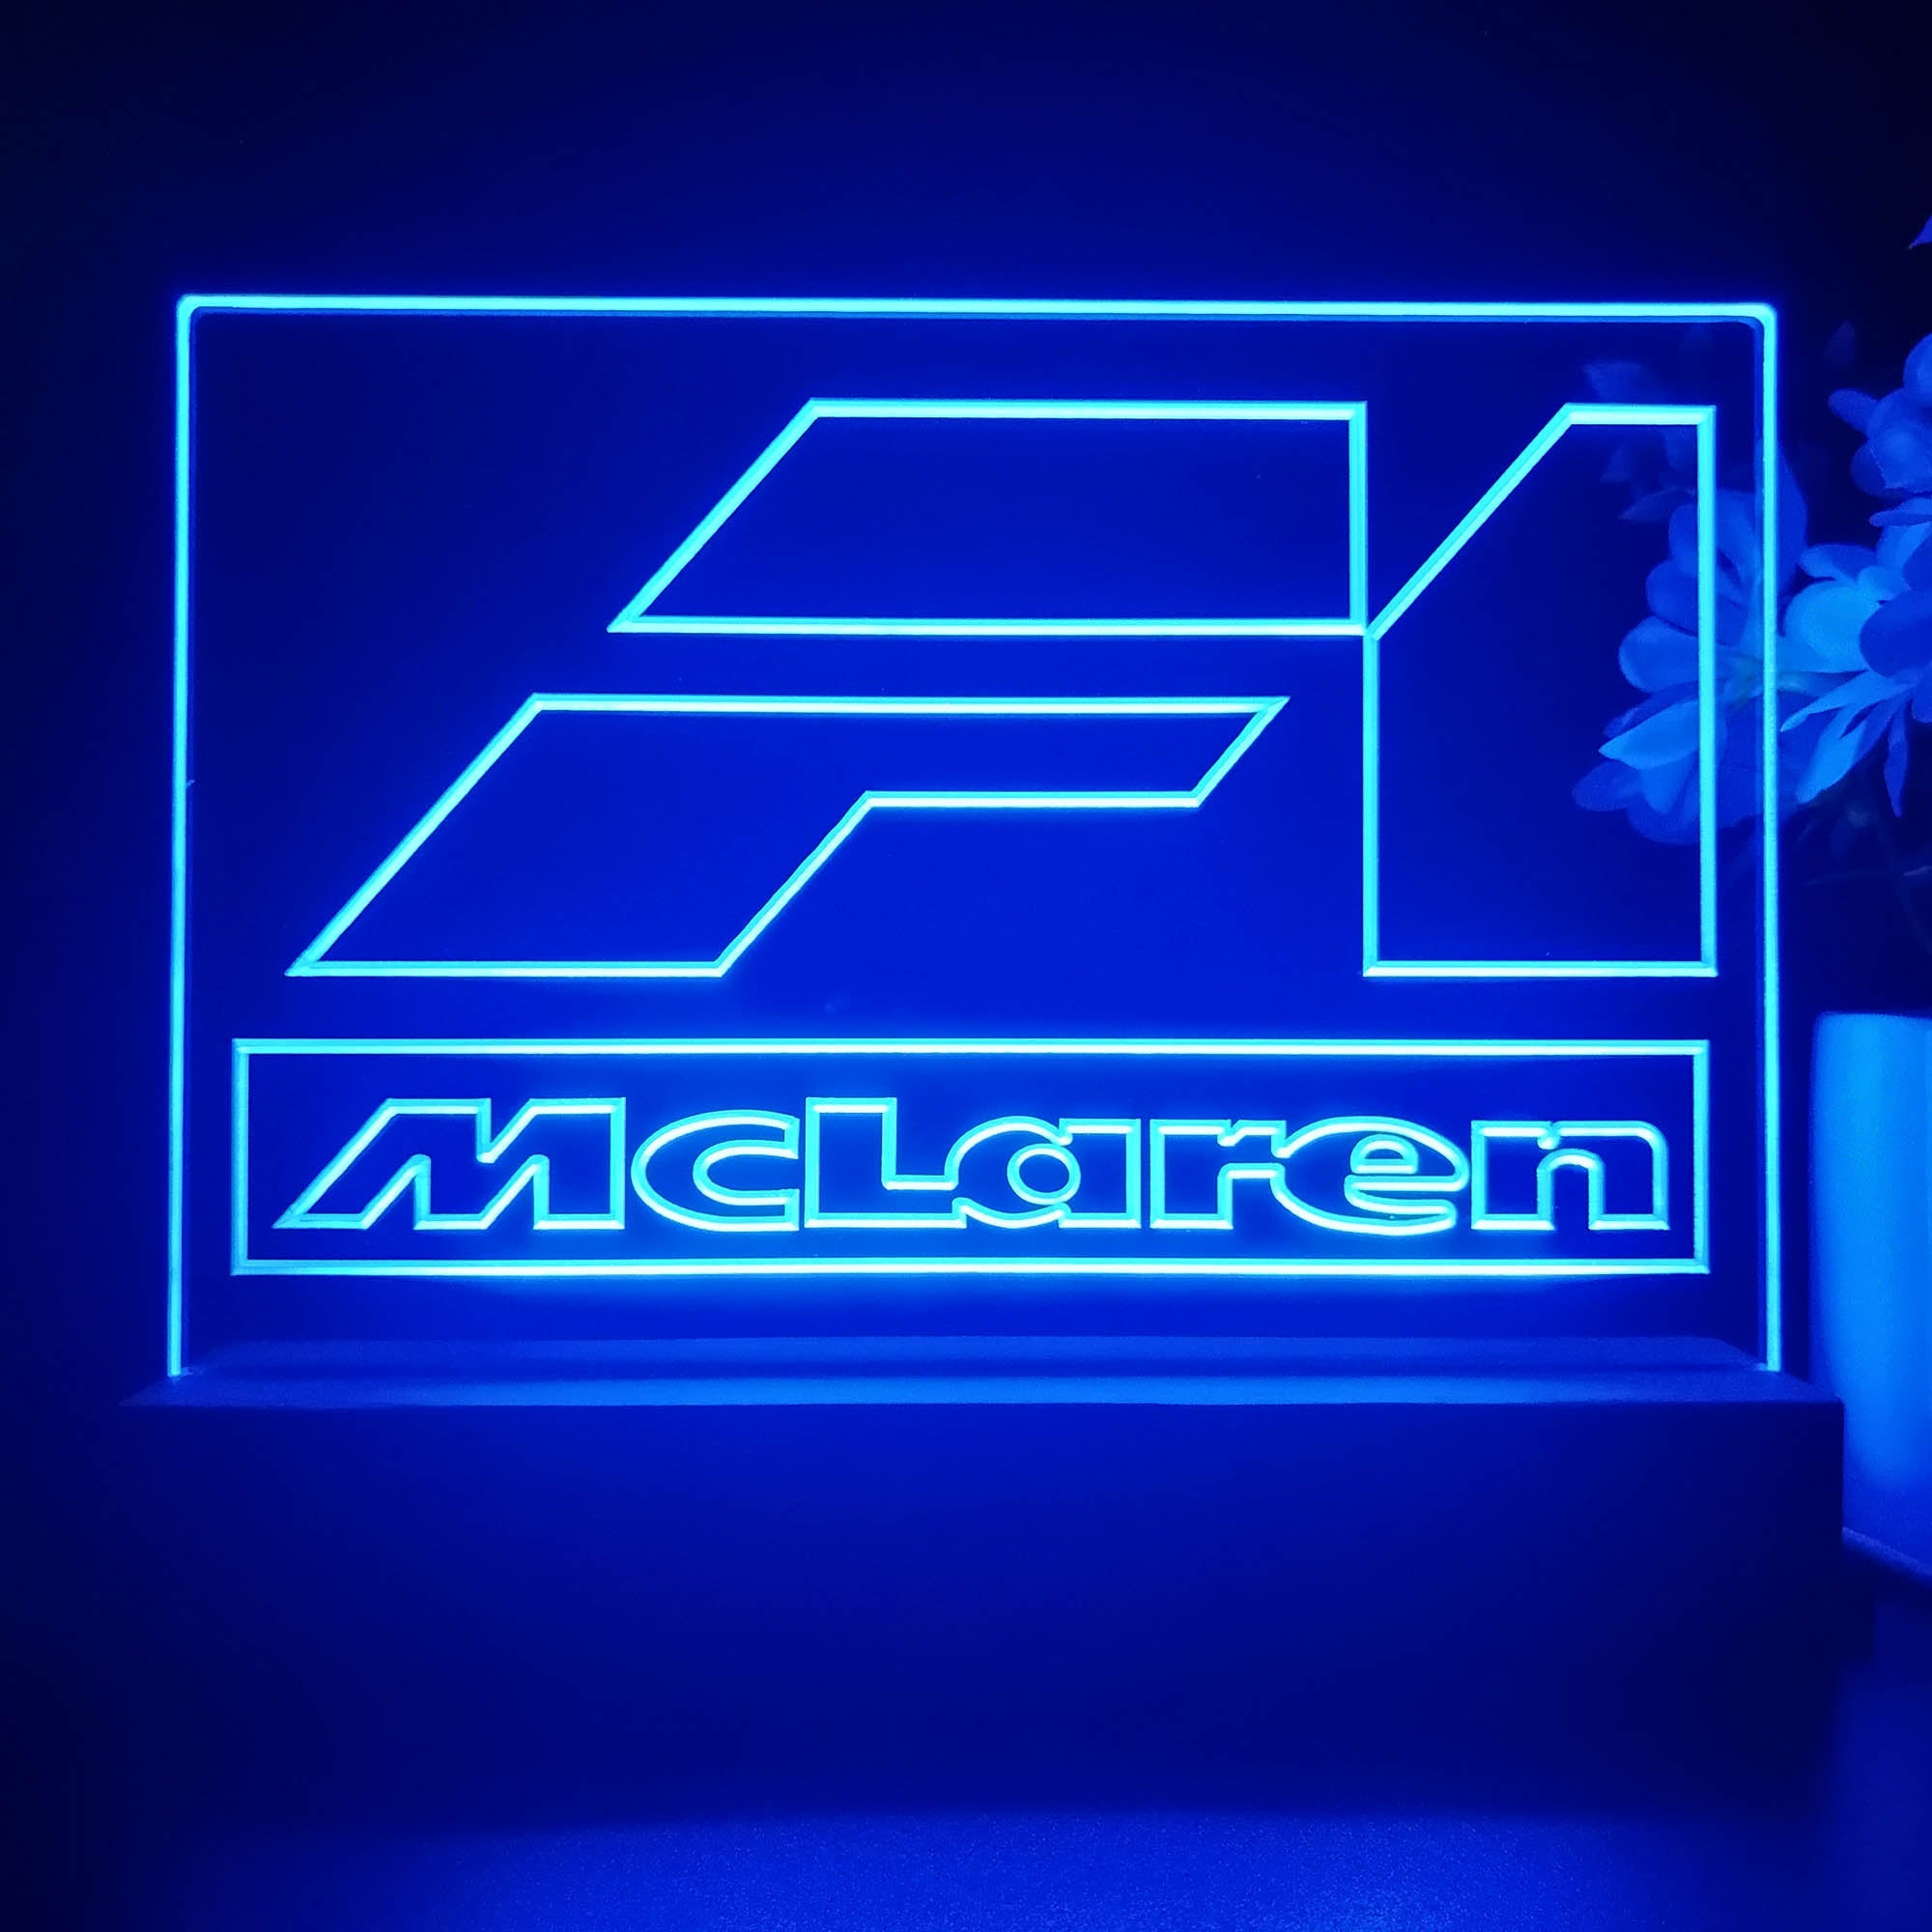 Mclaren F1 Car 3D Illusion Night Light Desk Lamp